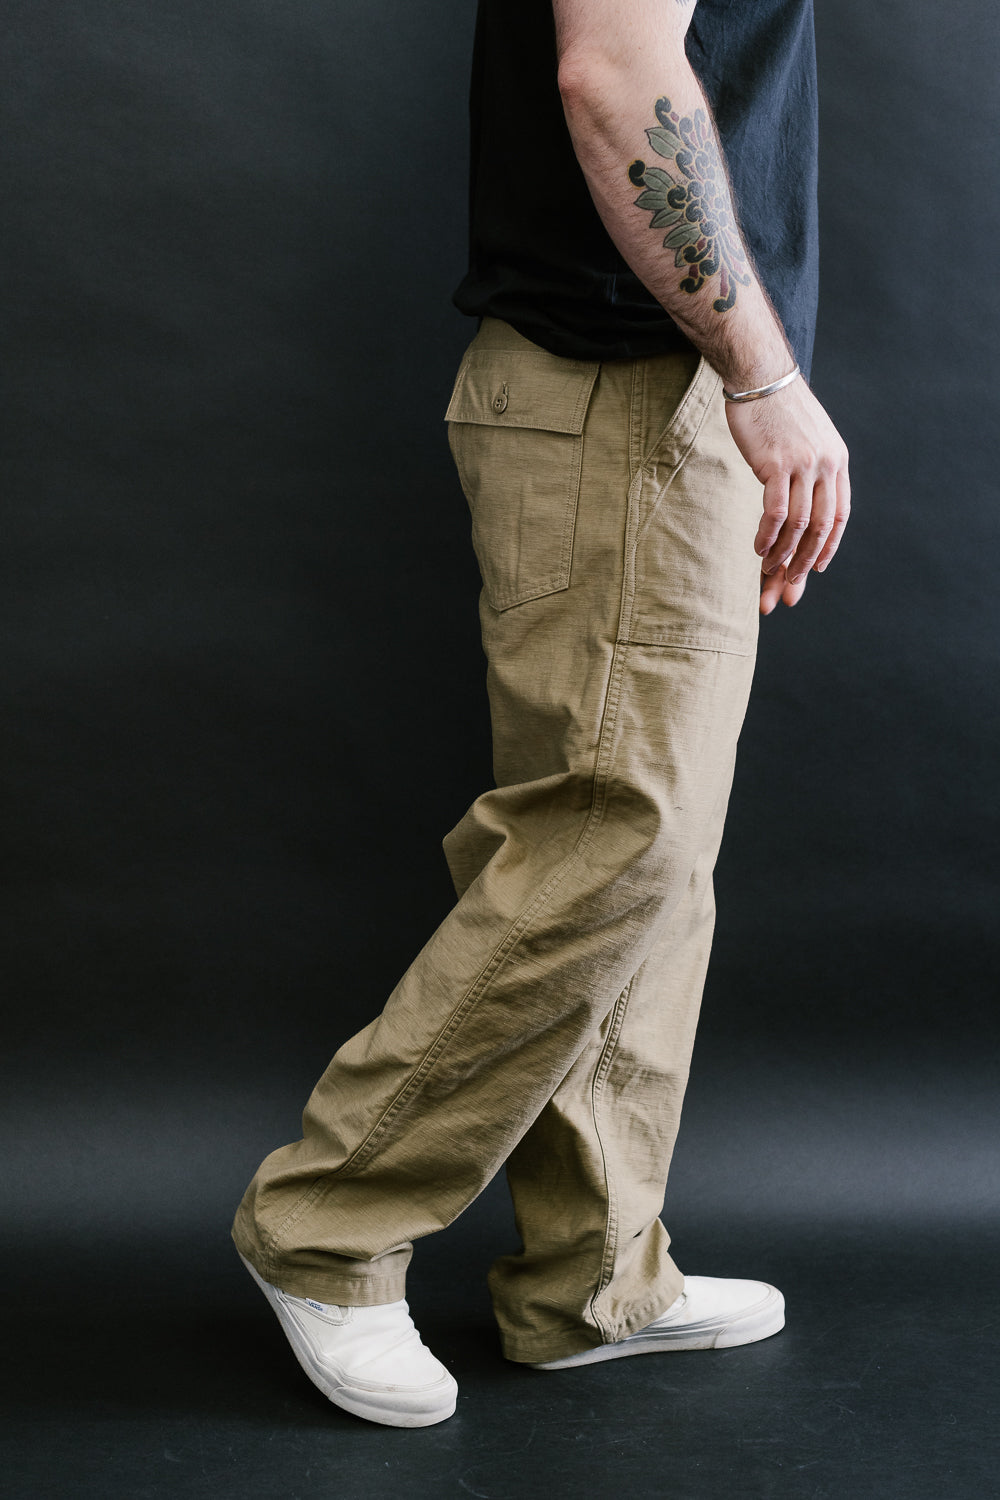 01-5002-40 - Fatigue Pants Reverse Sateen - Standard Fit - Khaki